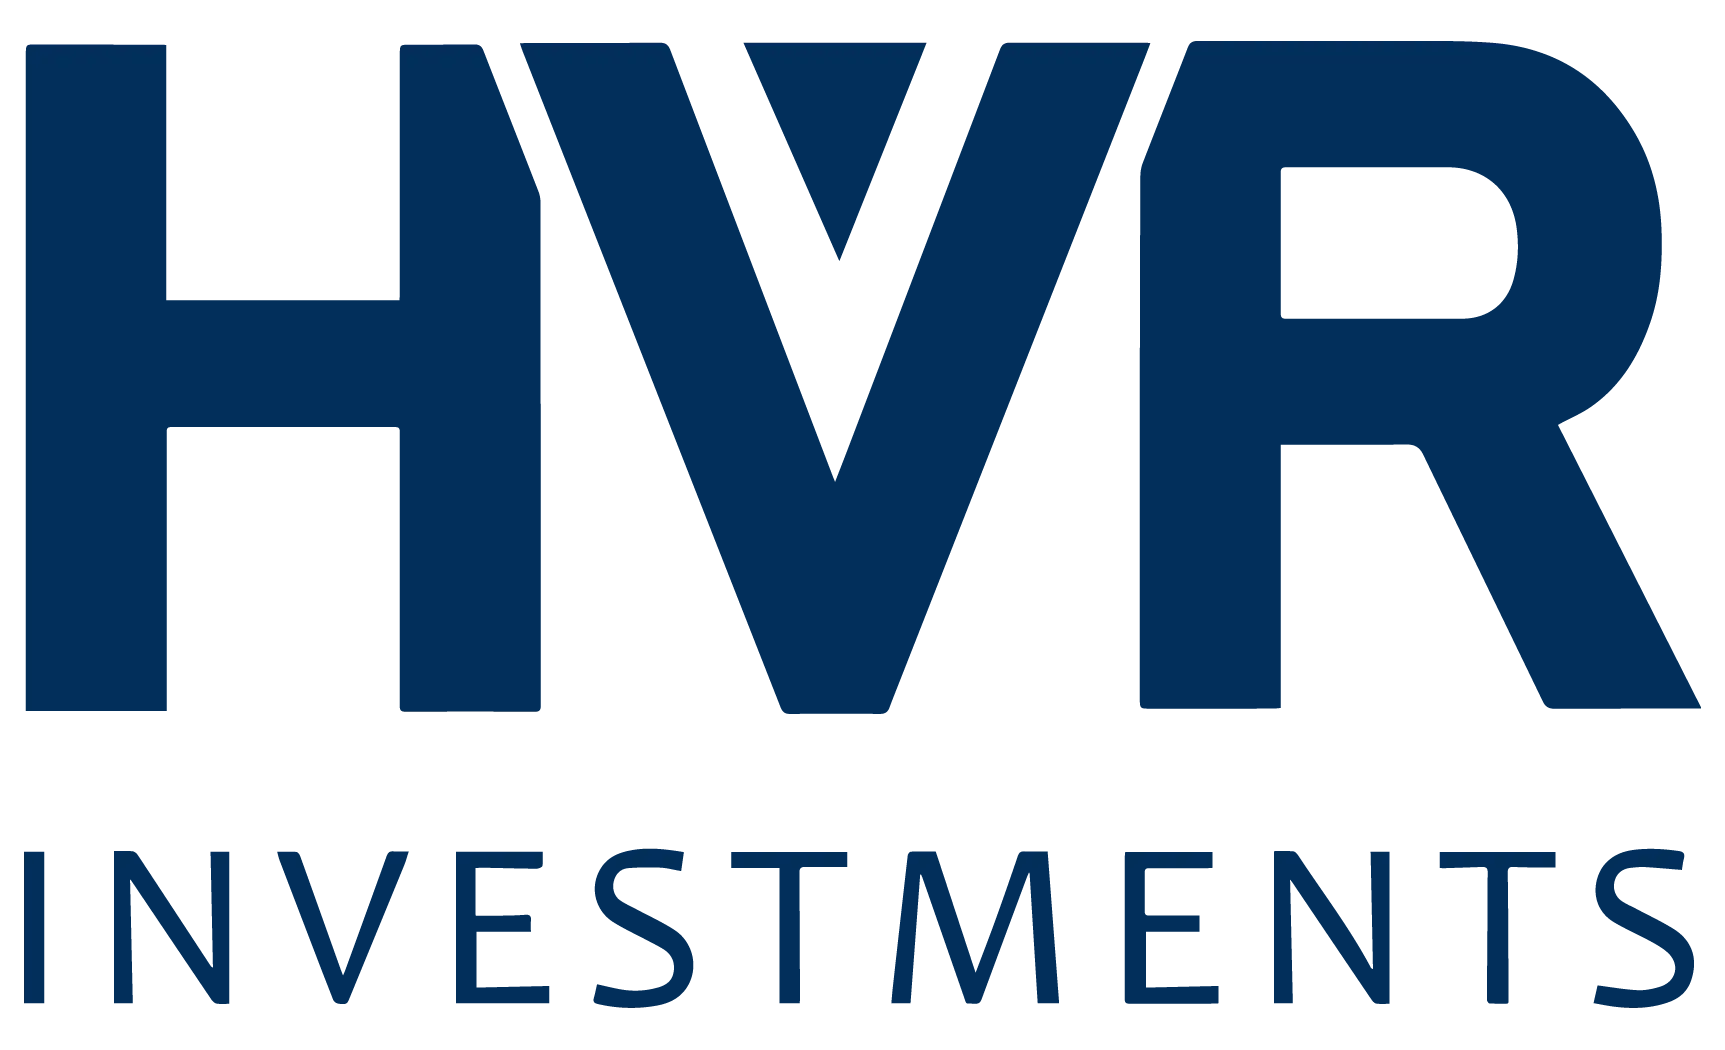 HVR Investments